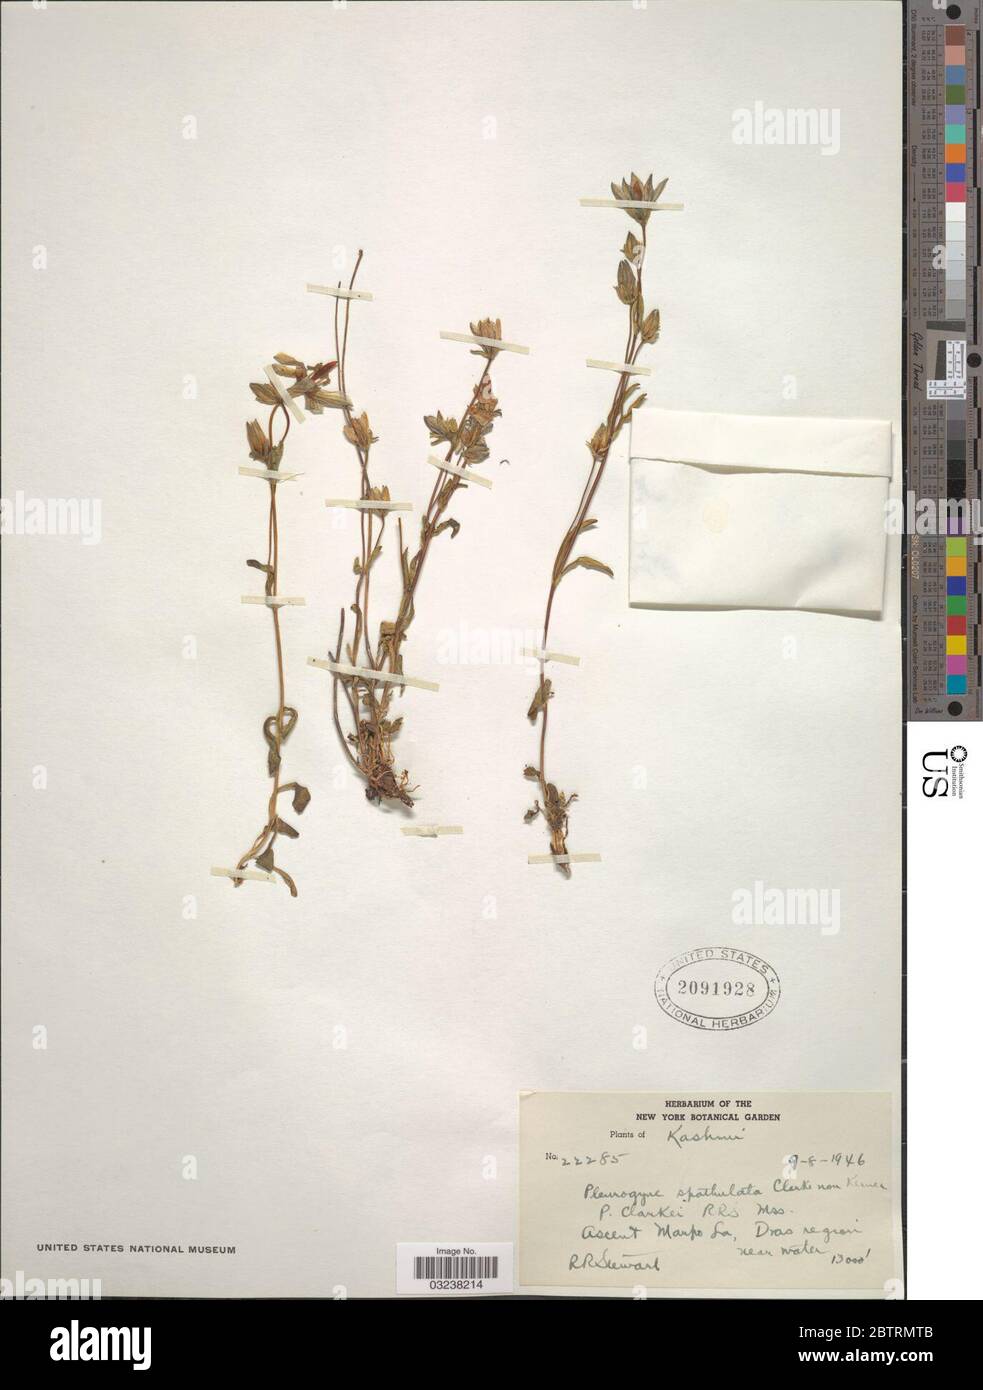 Lomatogonium spathulatum A Kern Fernald. Stock Photo